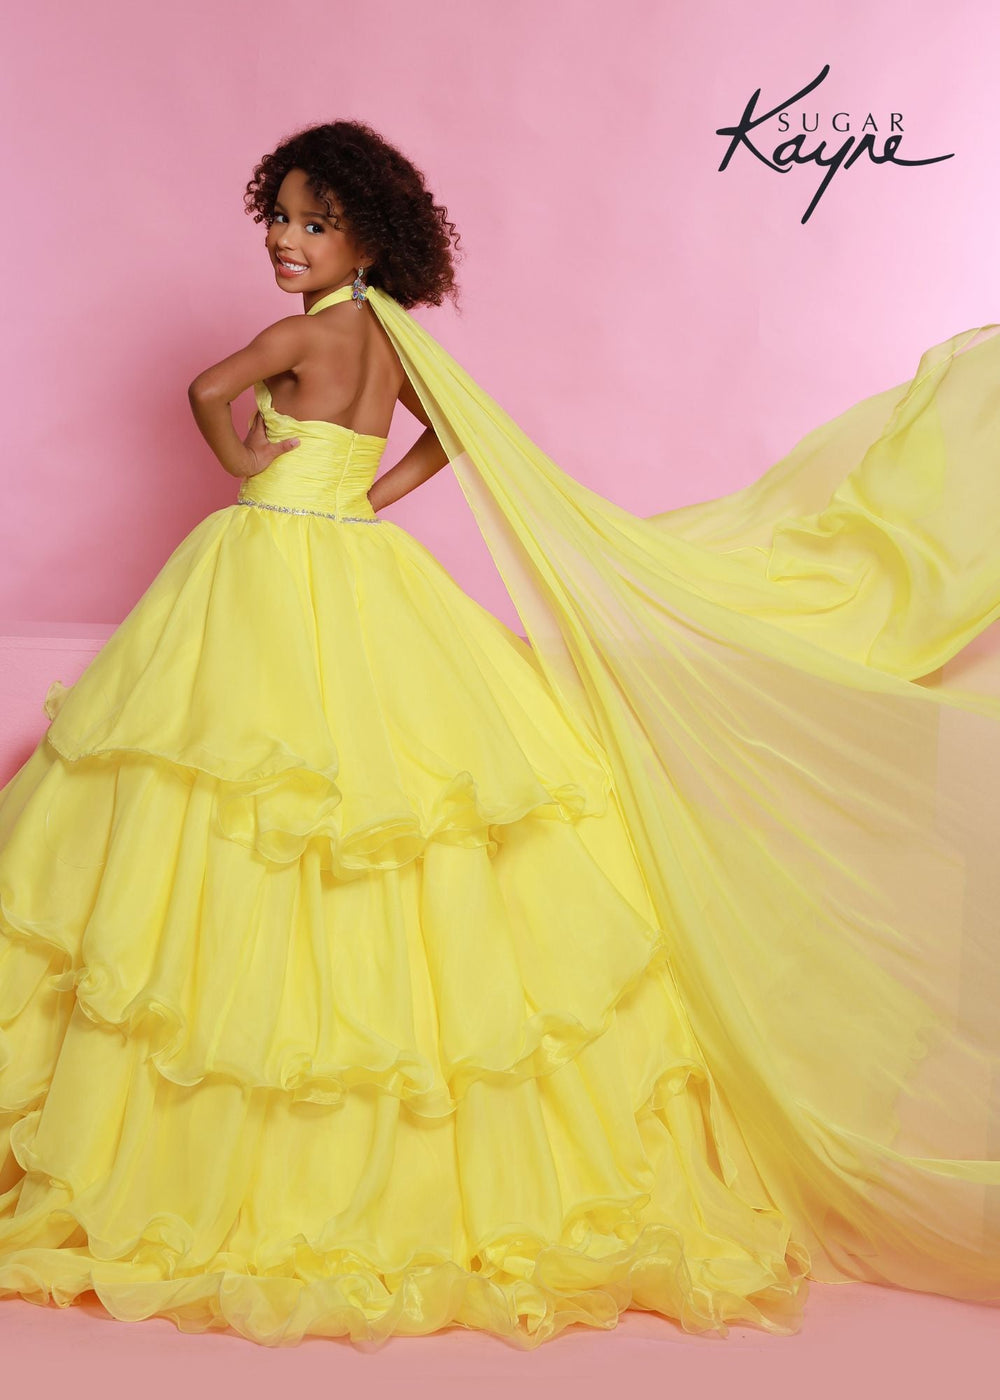 Sugar Kayne C305 Ruffled Layers Girls Preteens Pageant Dress Ball Gown Cape Halter Formal Dress - FOSTANI